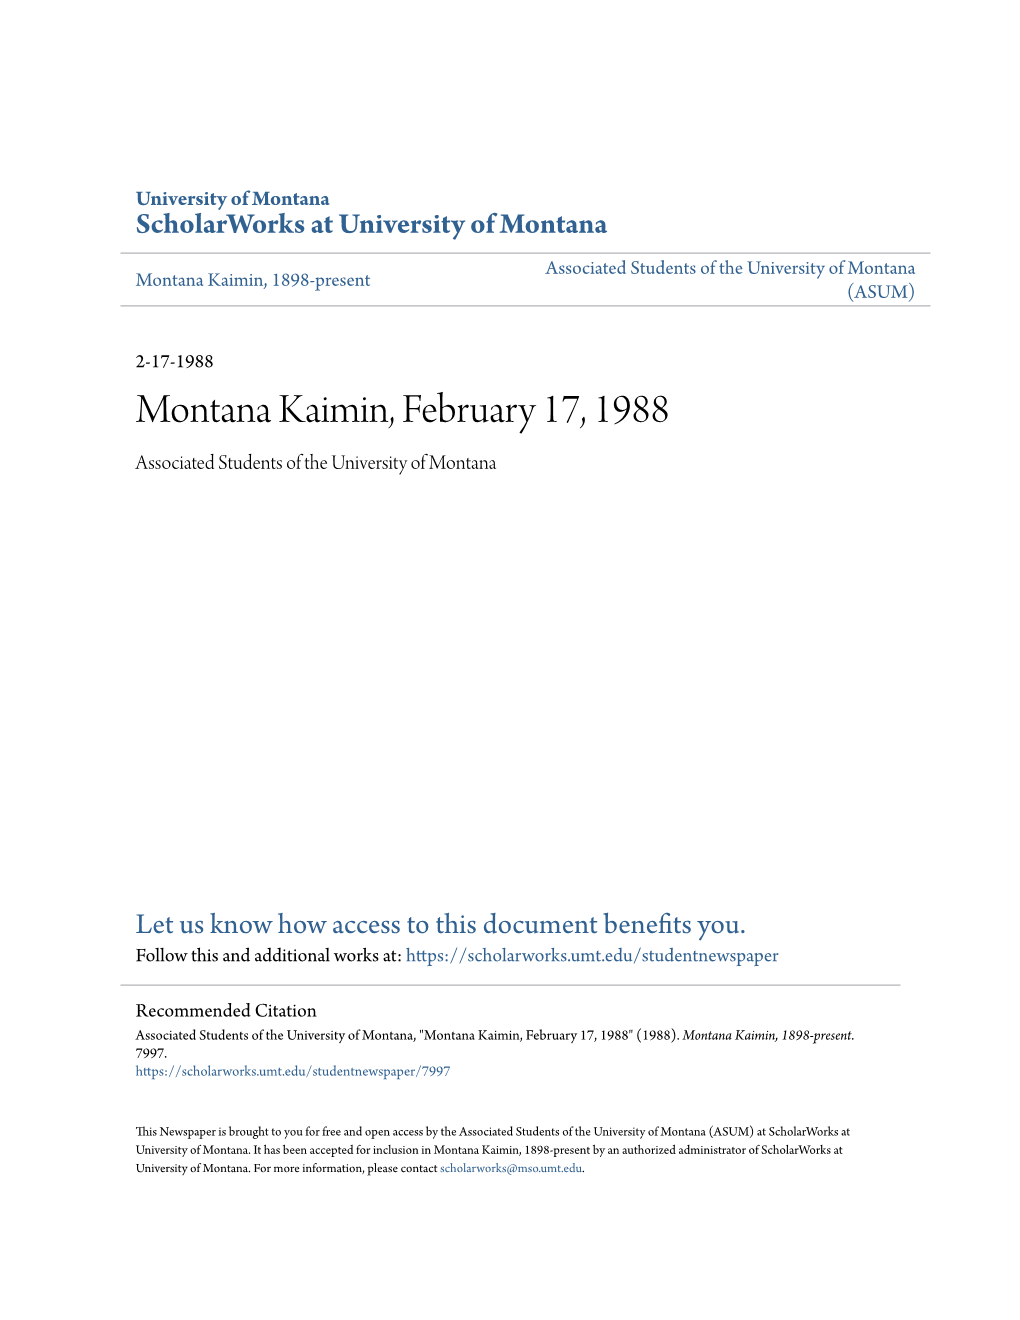 Montana Kaimin, February 17, 1988 Associated Students of the University of Montana